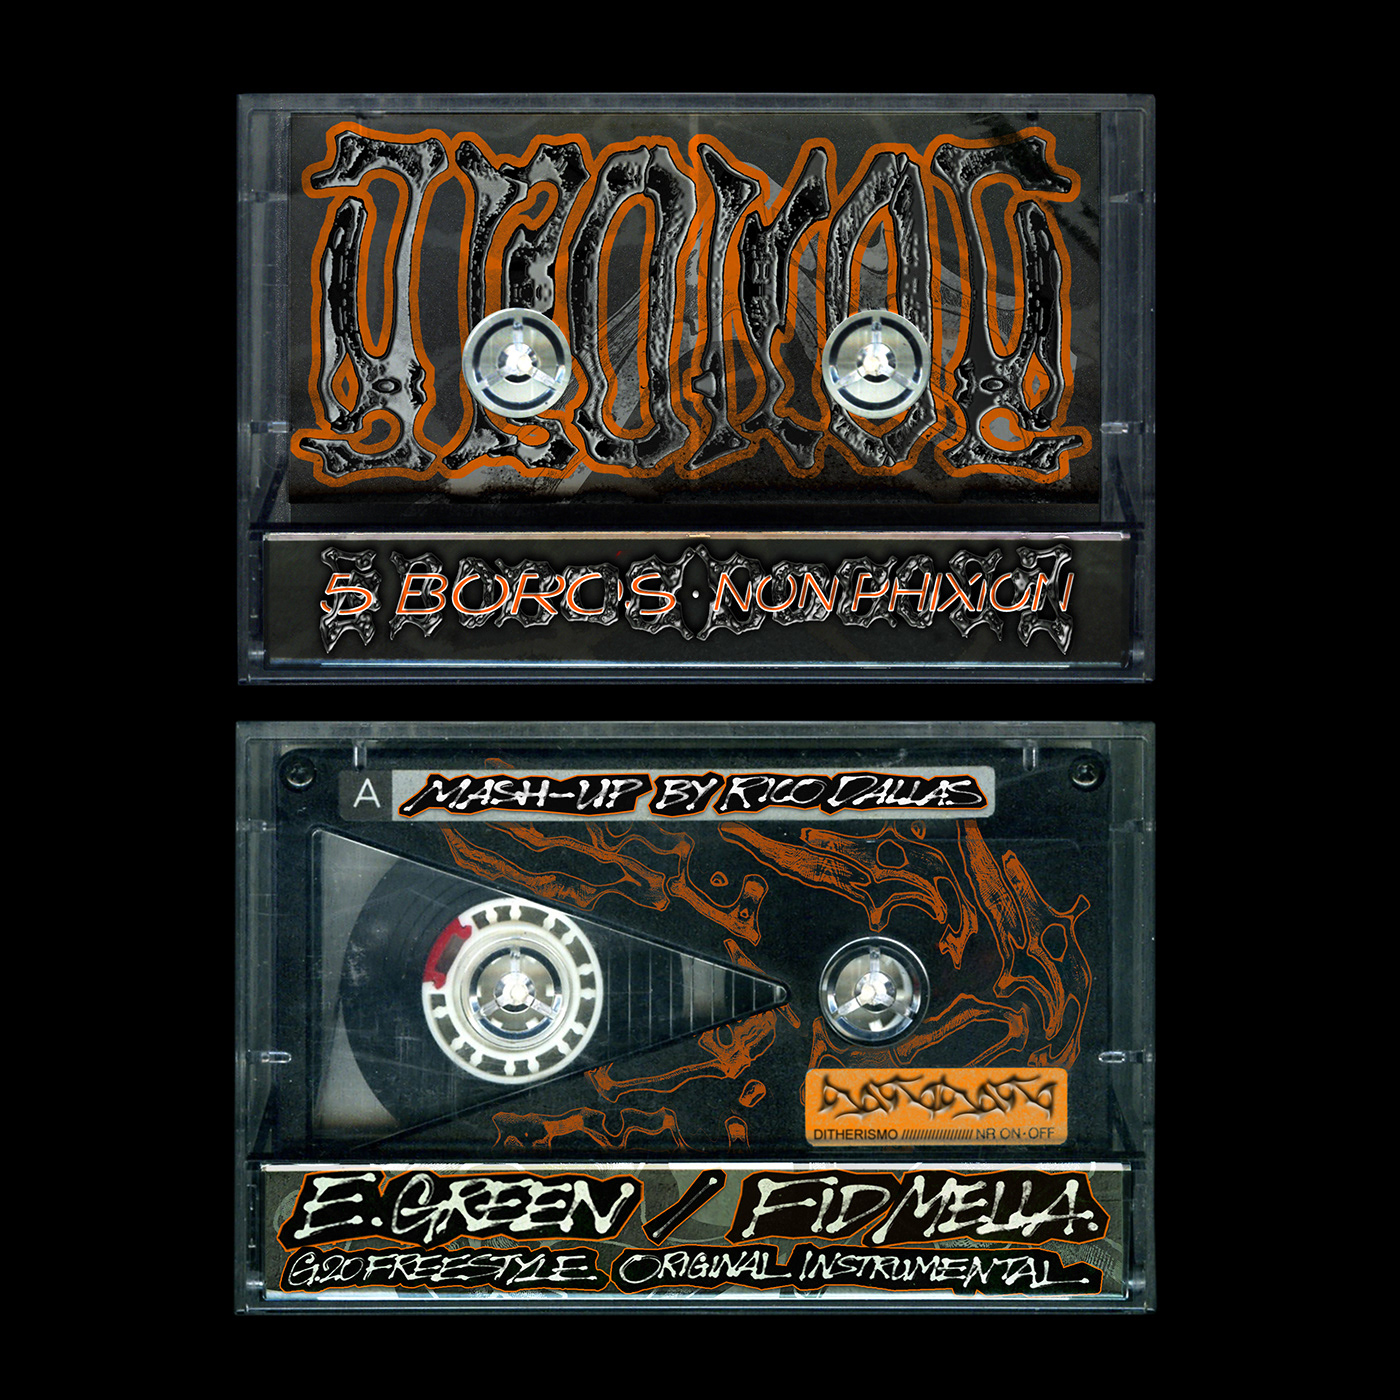 acapella cassette hip hop italian design mash-up Mockup music tape gif loop